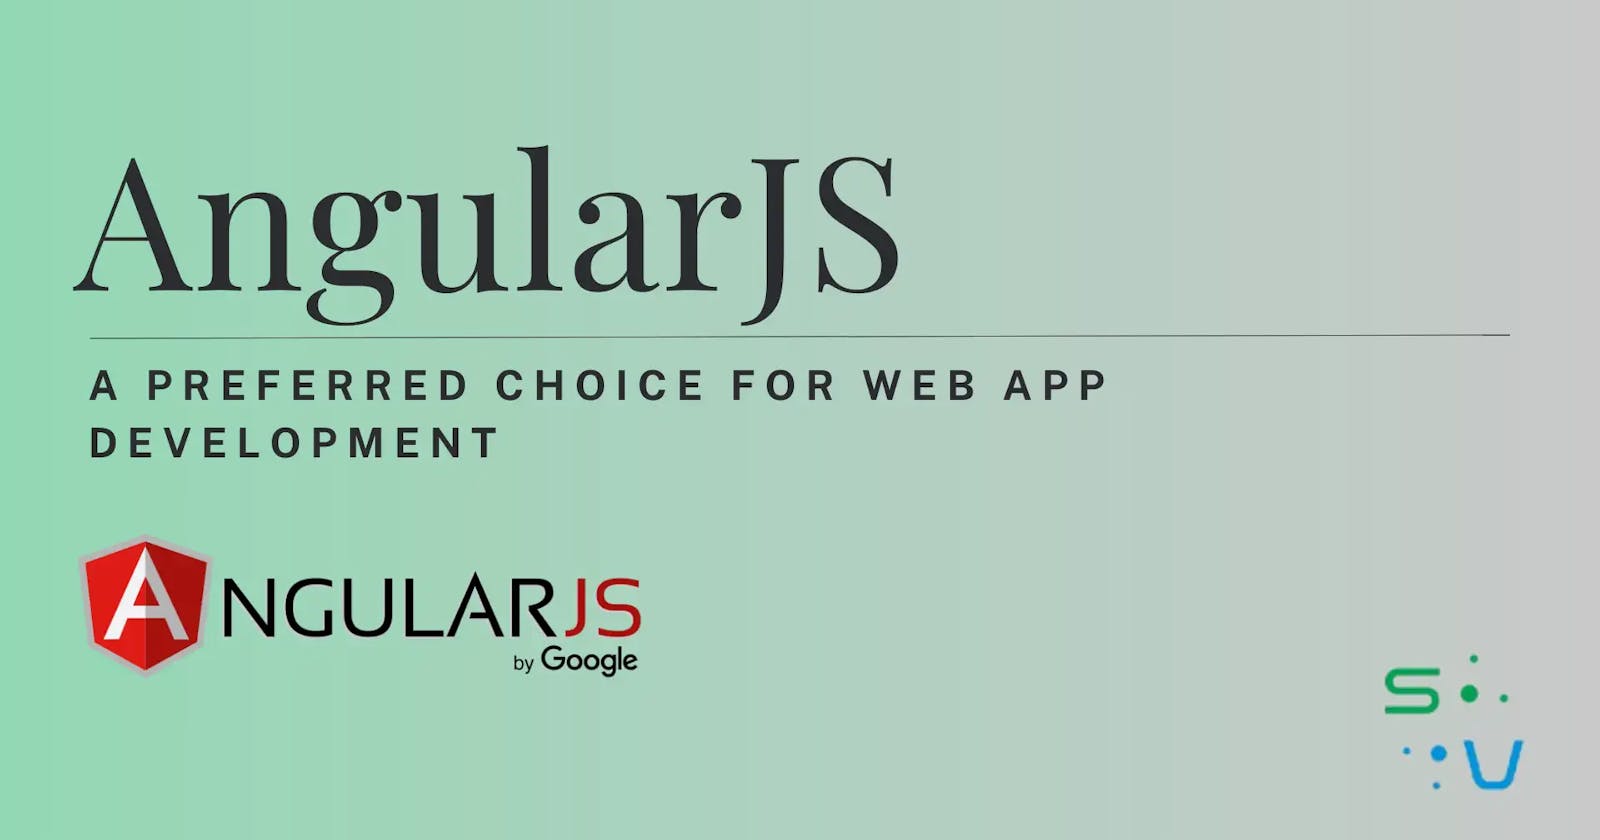 Why choose AngularJS for mobile app development?